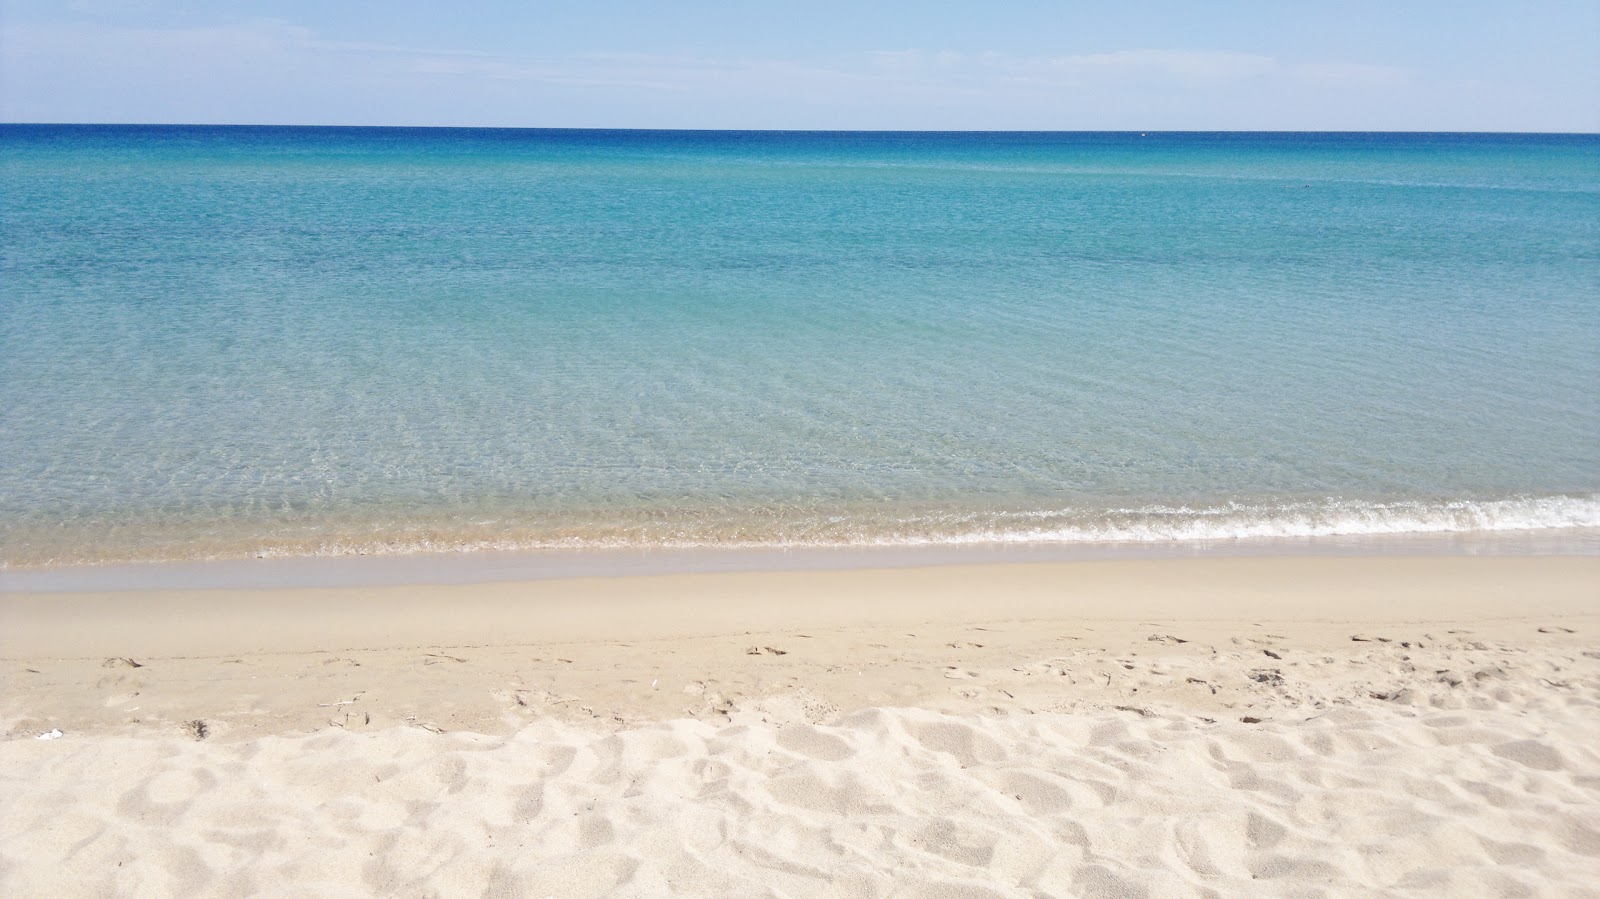 Foto av Spiaggia di S'Orologiu med lång rak strand